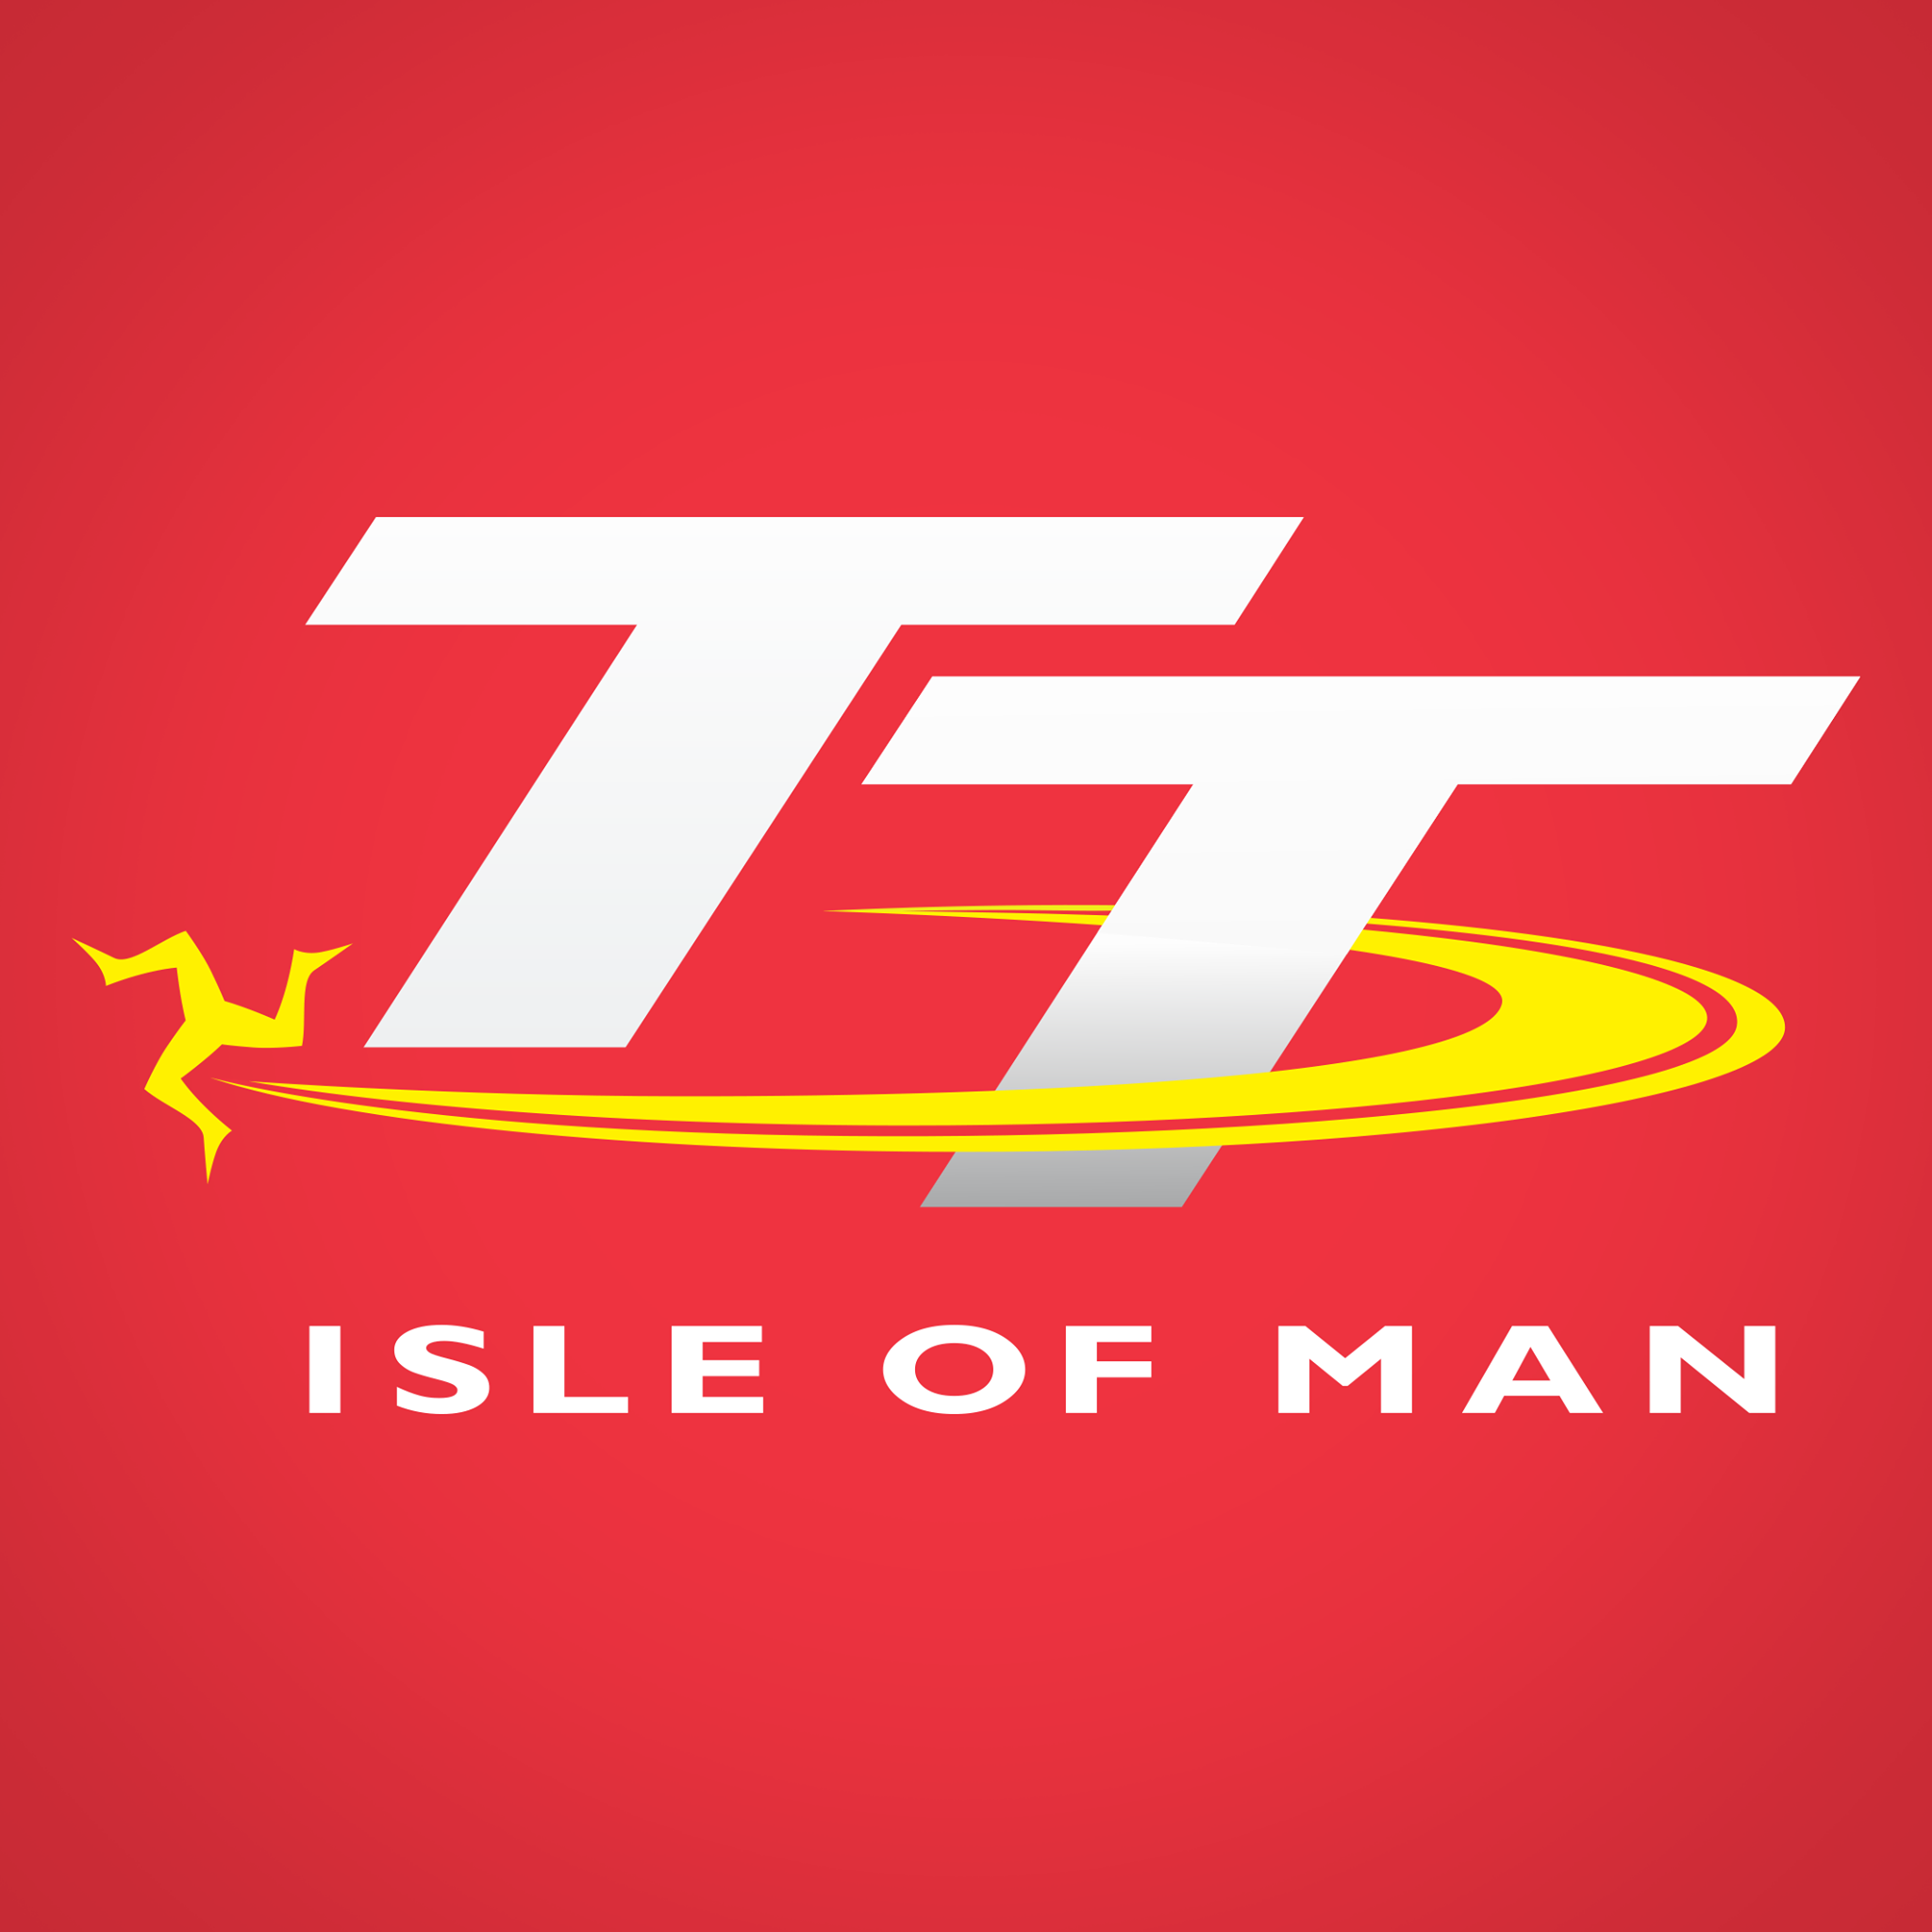 TT Isle of Man